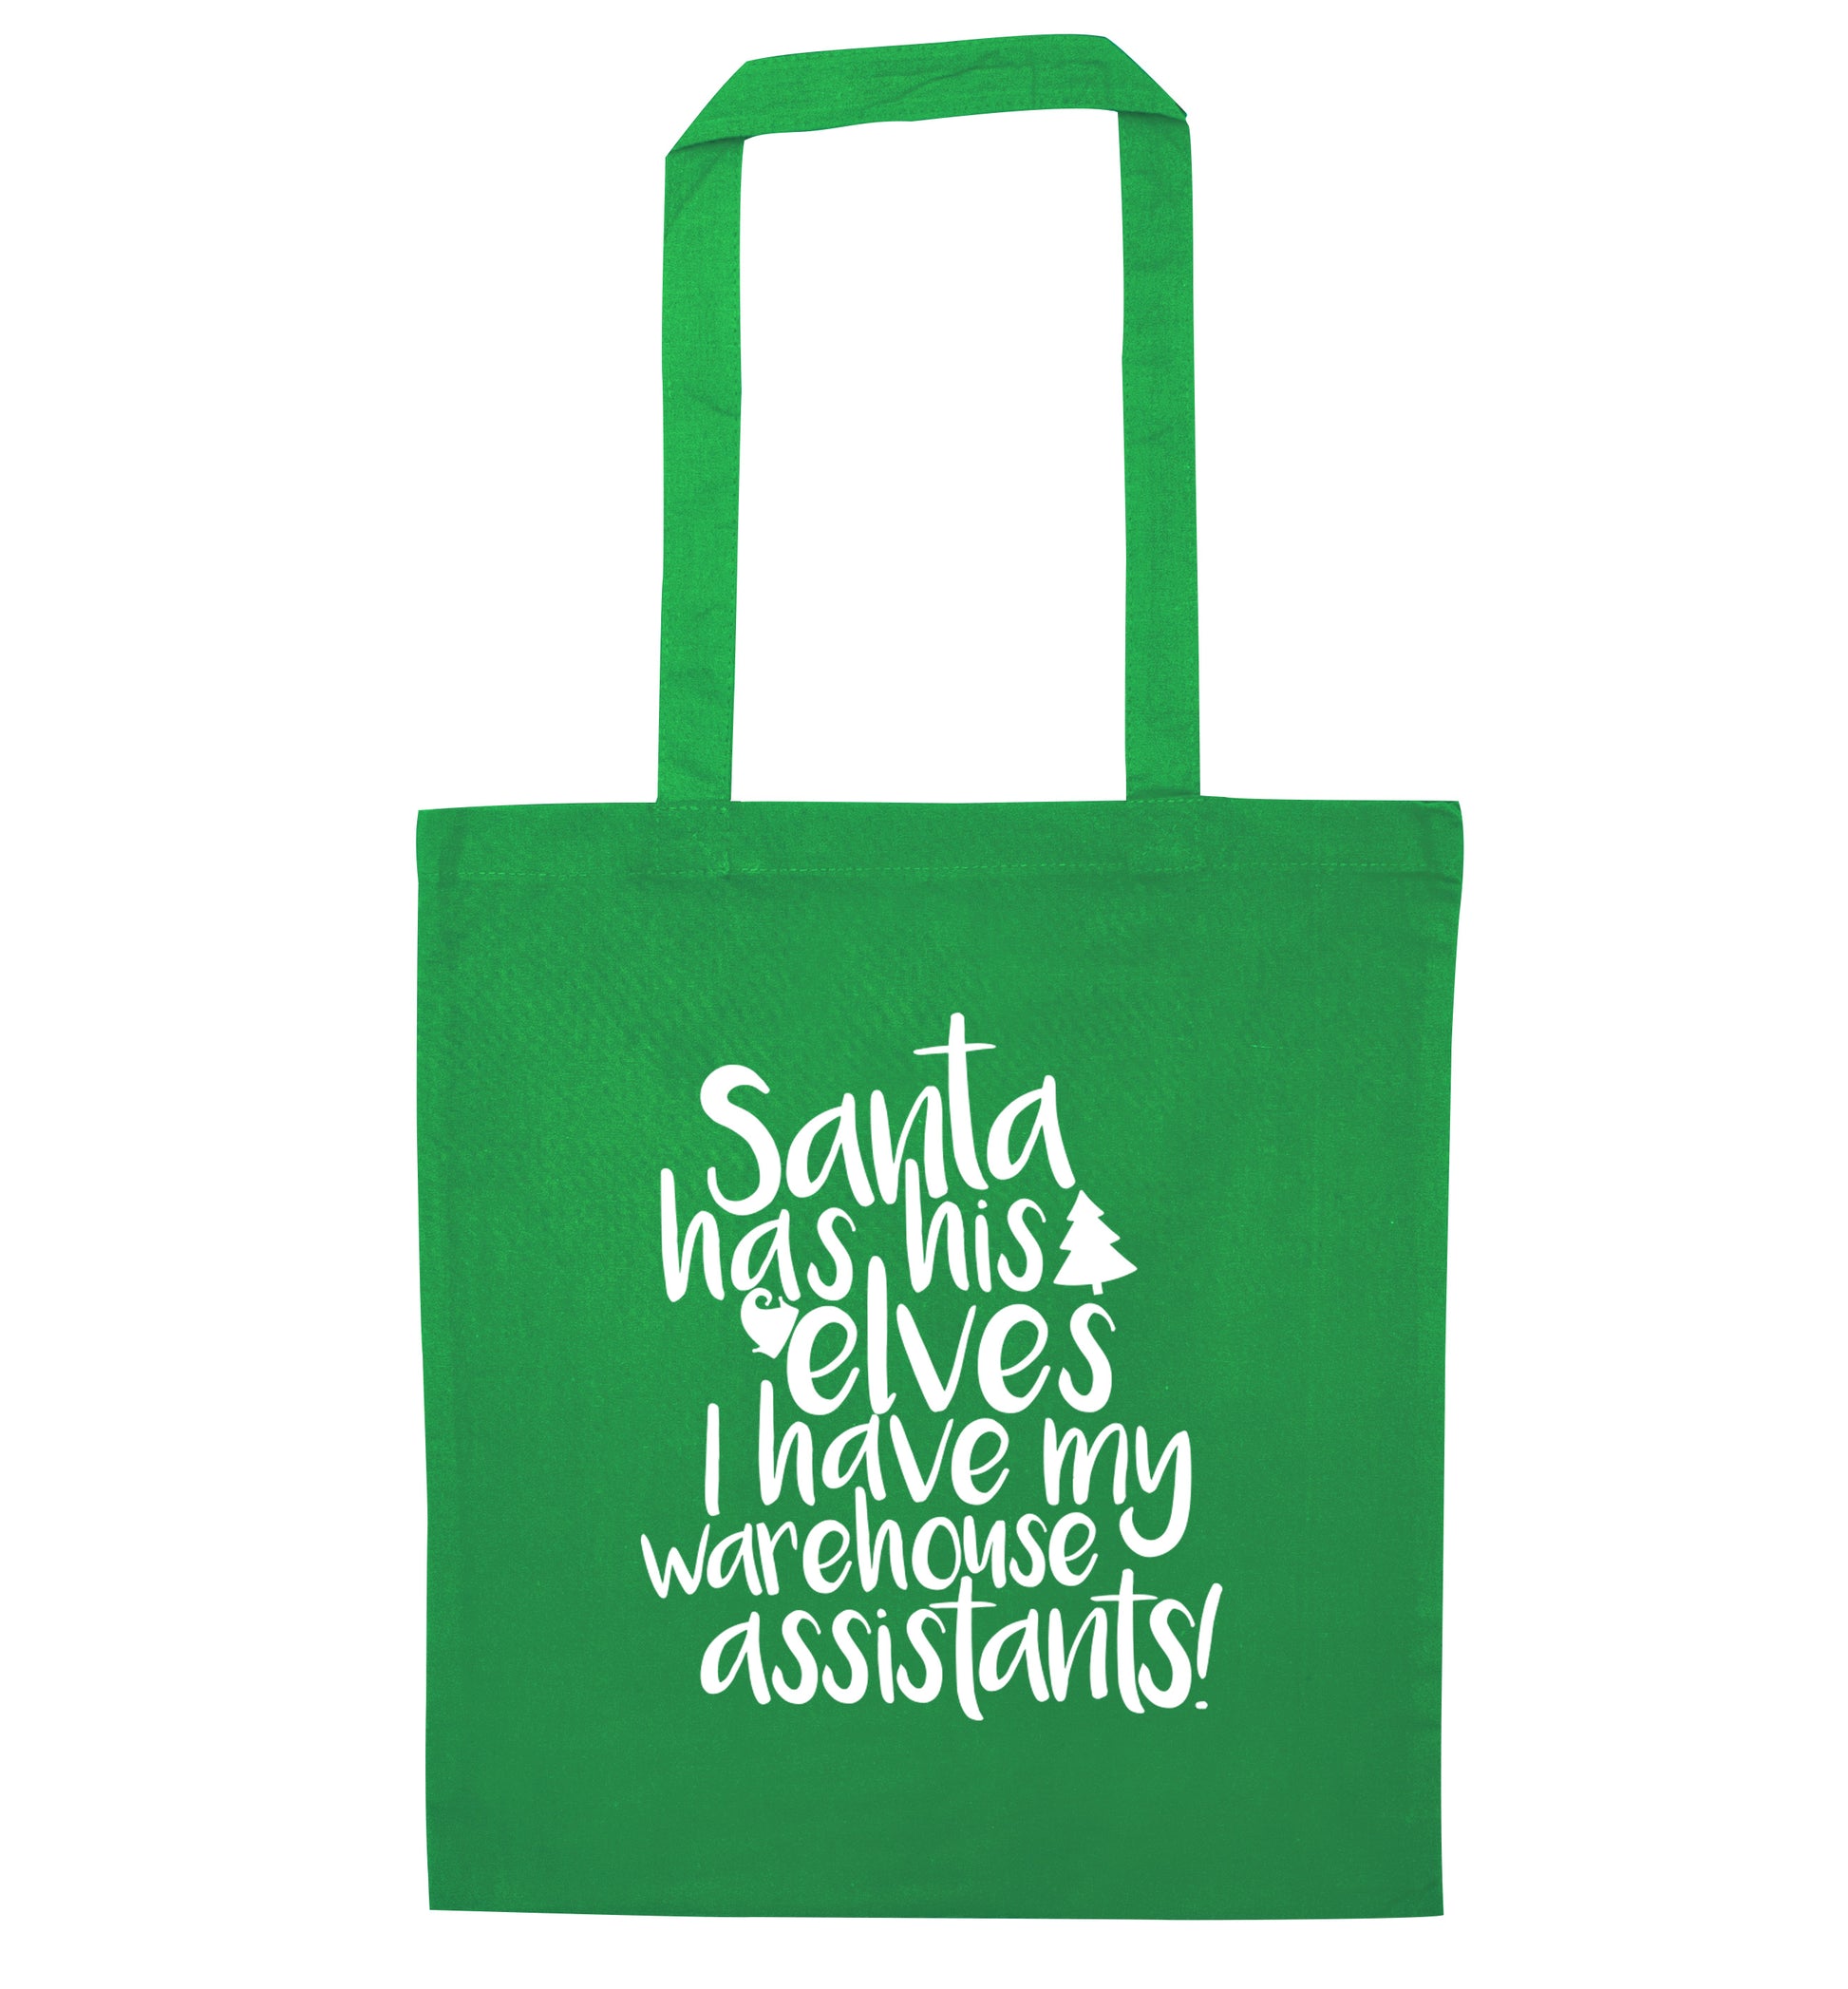 Santa has his elves I have my warehouse assistants green tote bag